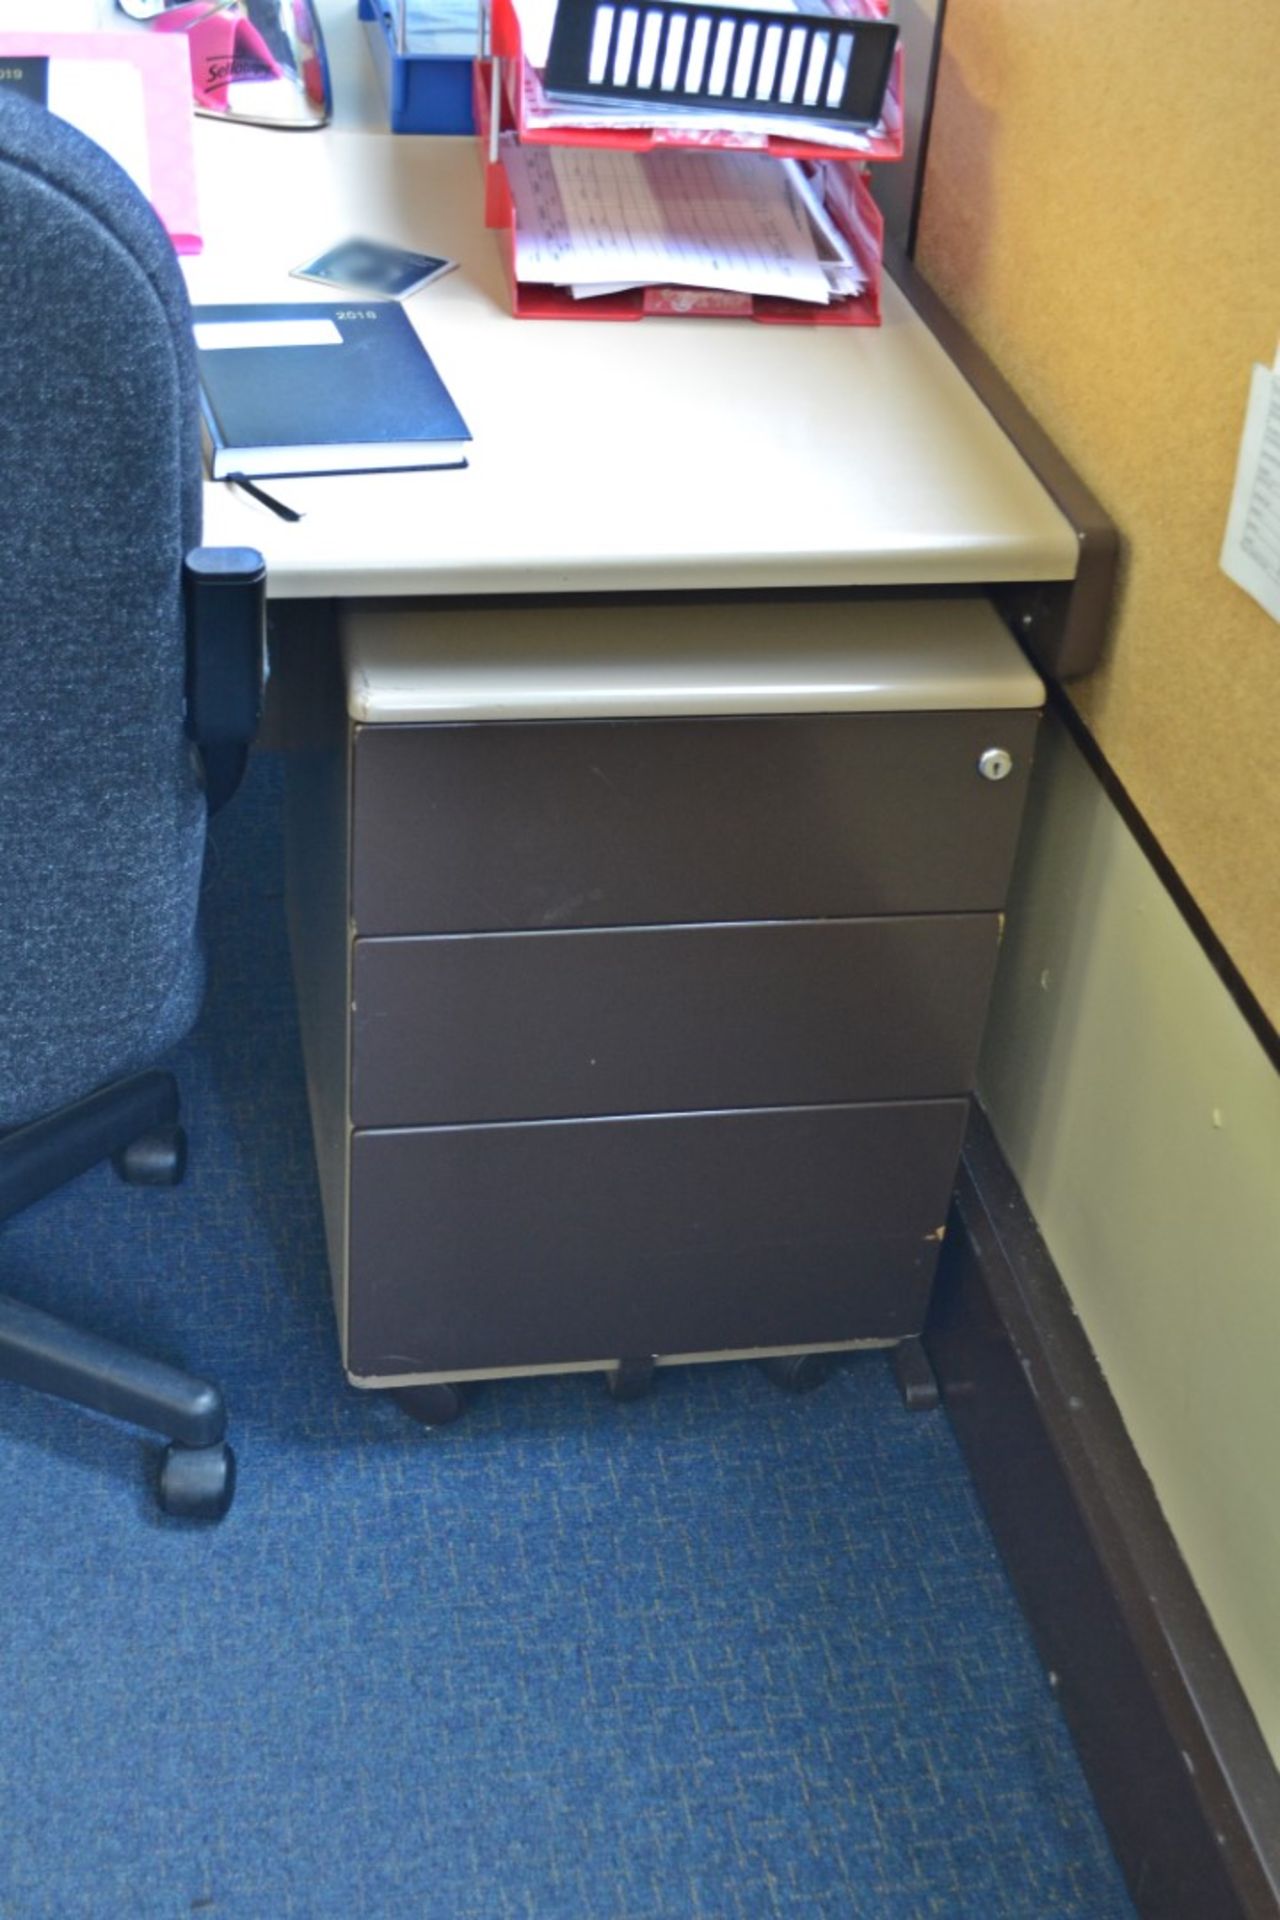 3 x Beige Rectangular Office Desks - Ref: VM357 - CL409 - Location WF16 - Image 3 of 3